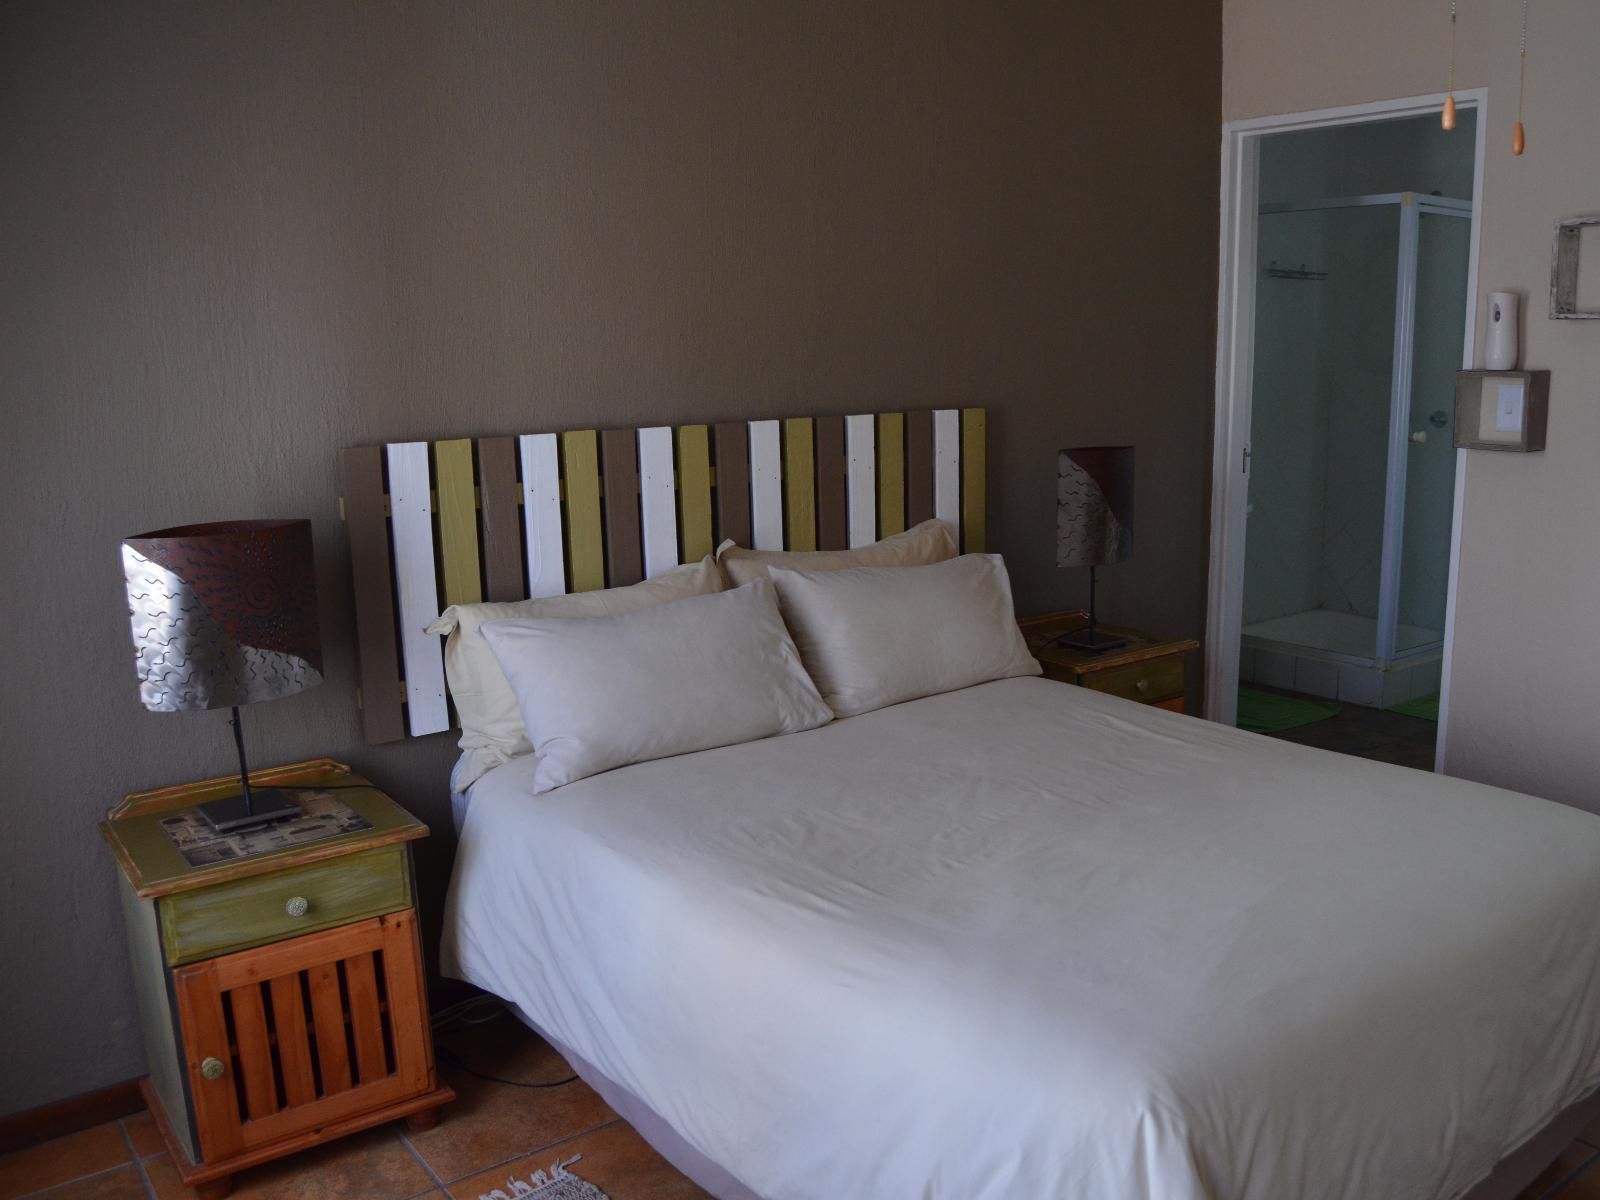 Adelpragt Guest House Lydenburg Mpumalanga South Africa Bedroom